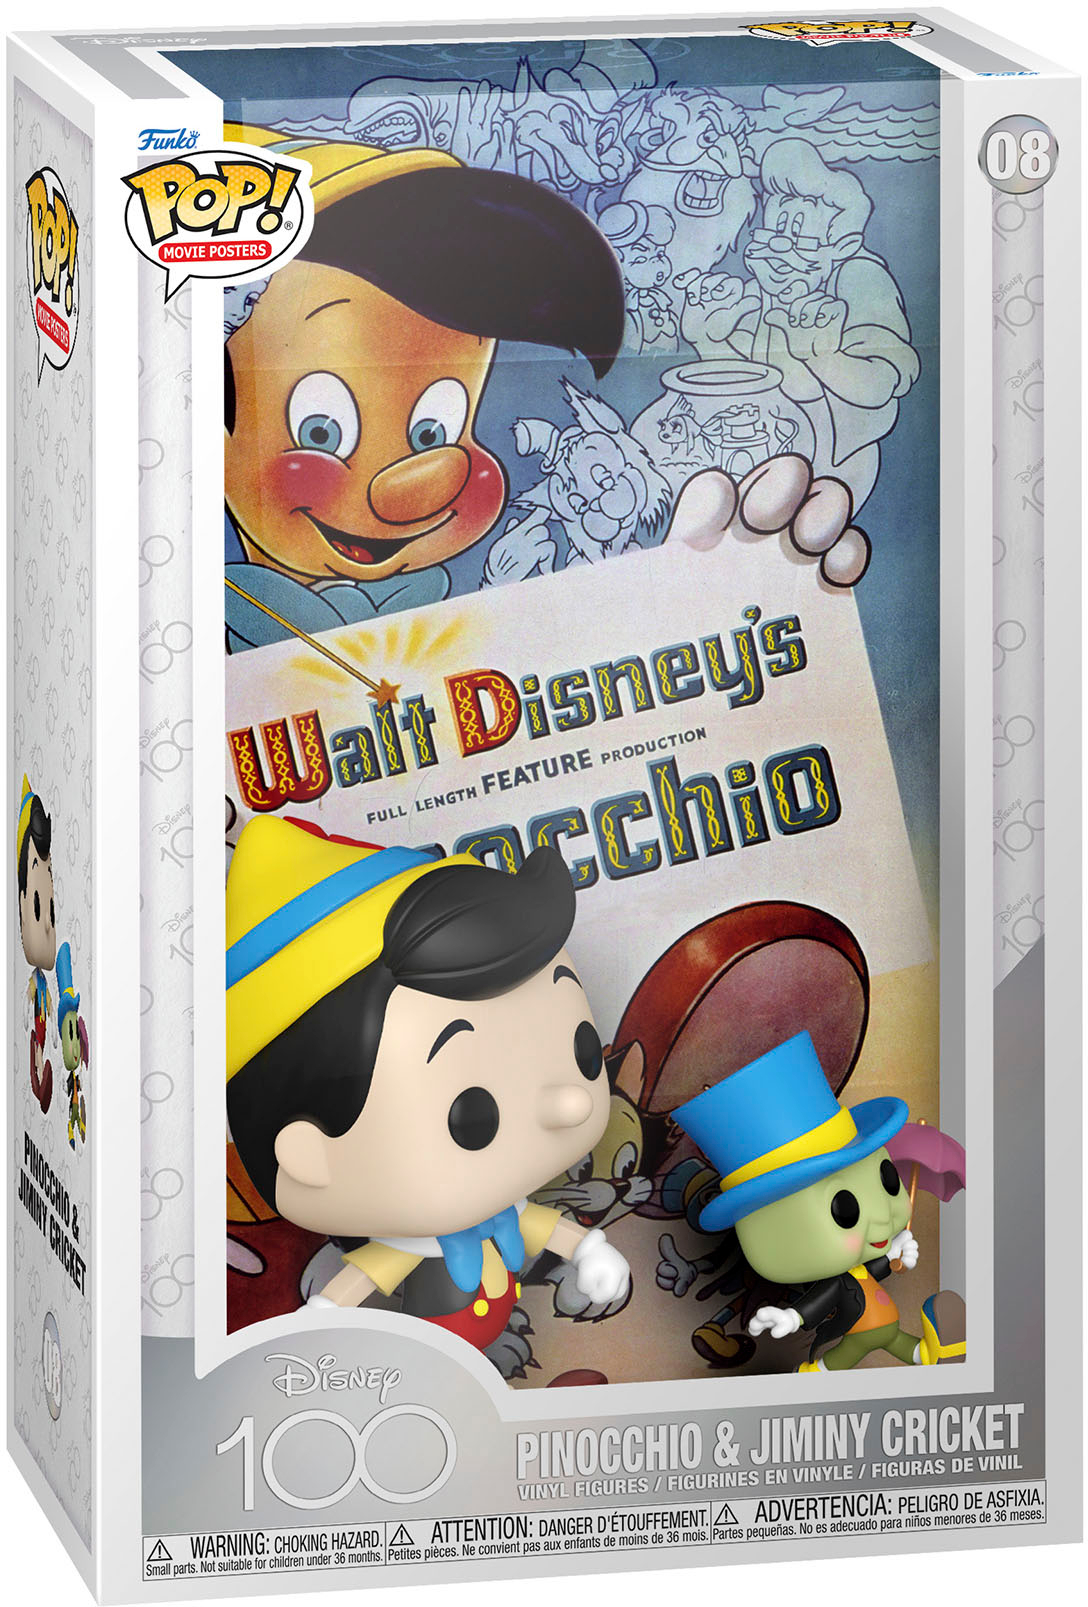 ost han Sømand Funko POP! Movie Posters: Walt Disney's- Pinocchio & Jimny Cricket 67579 -  Best Buy